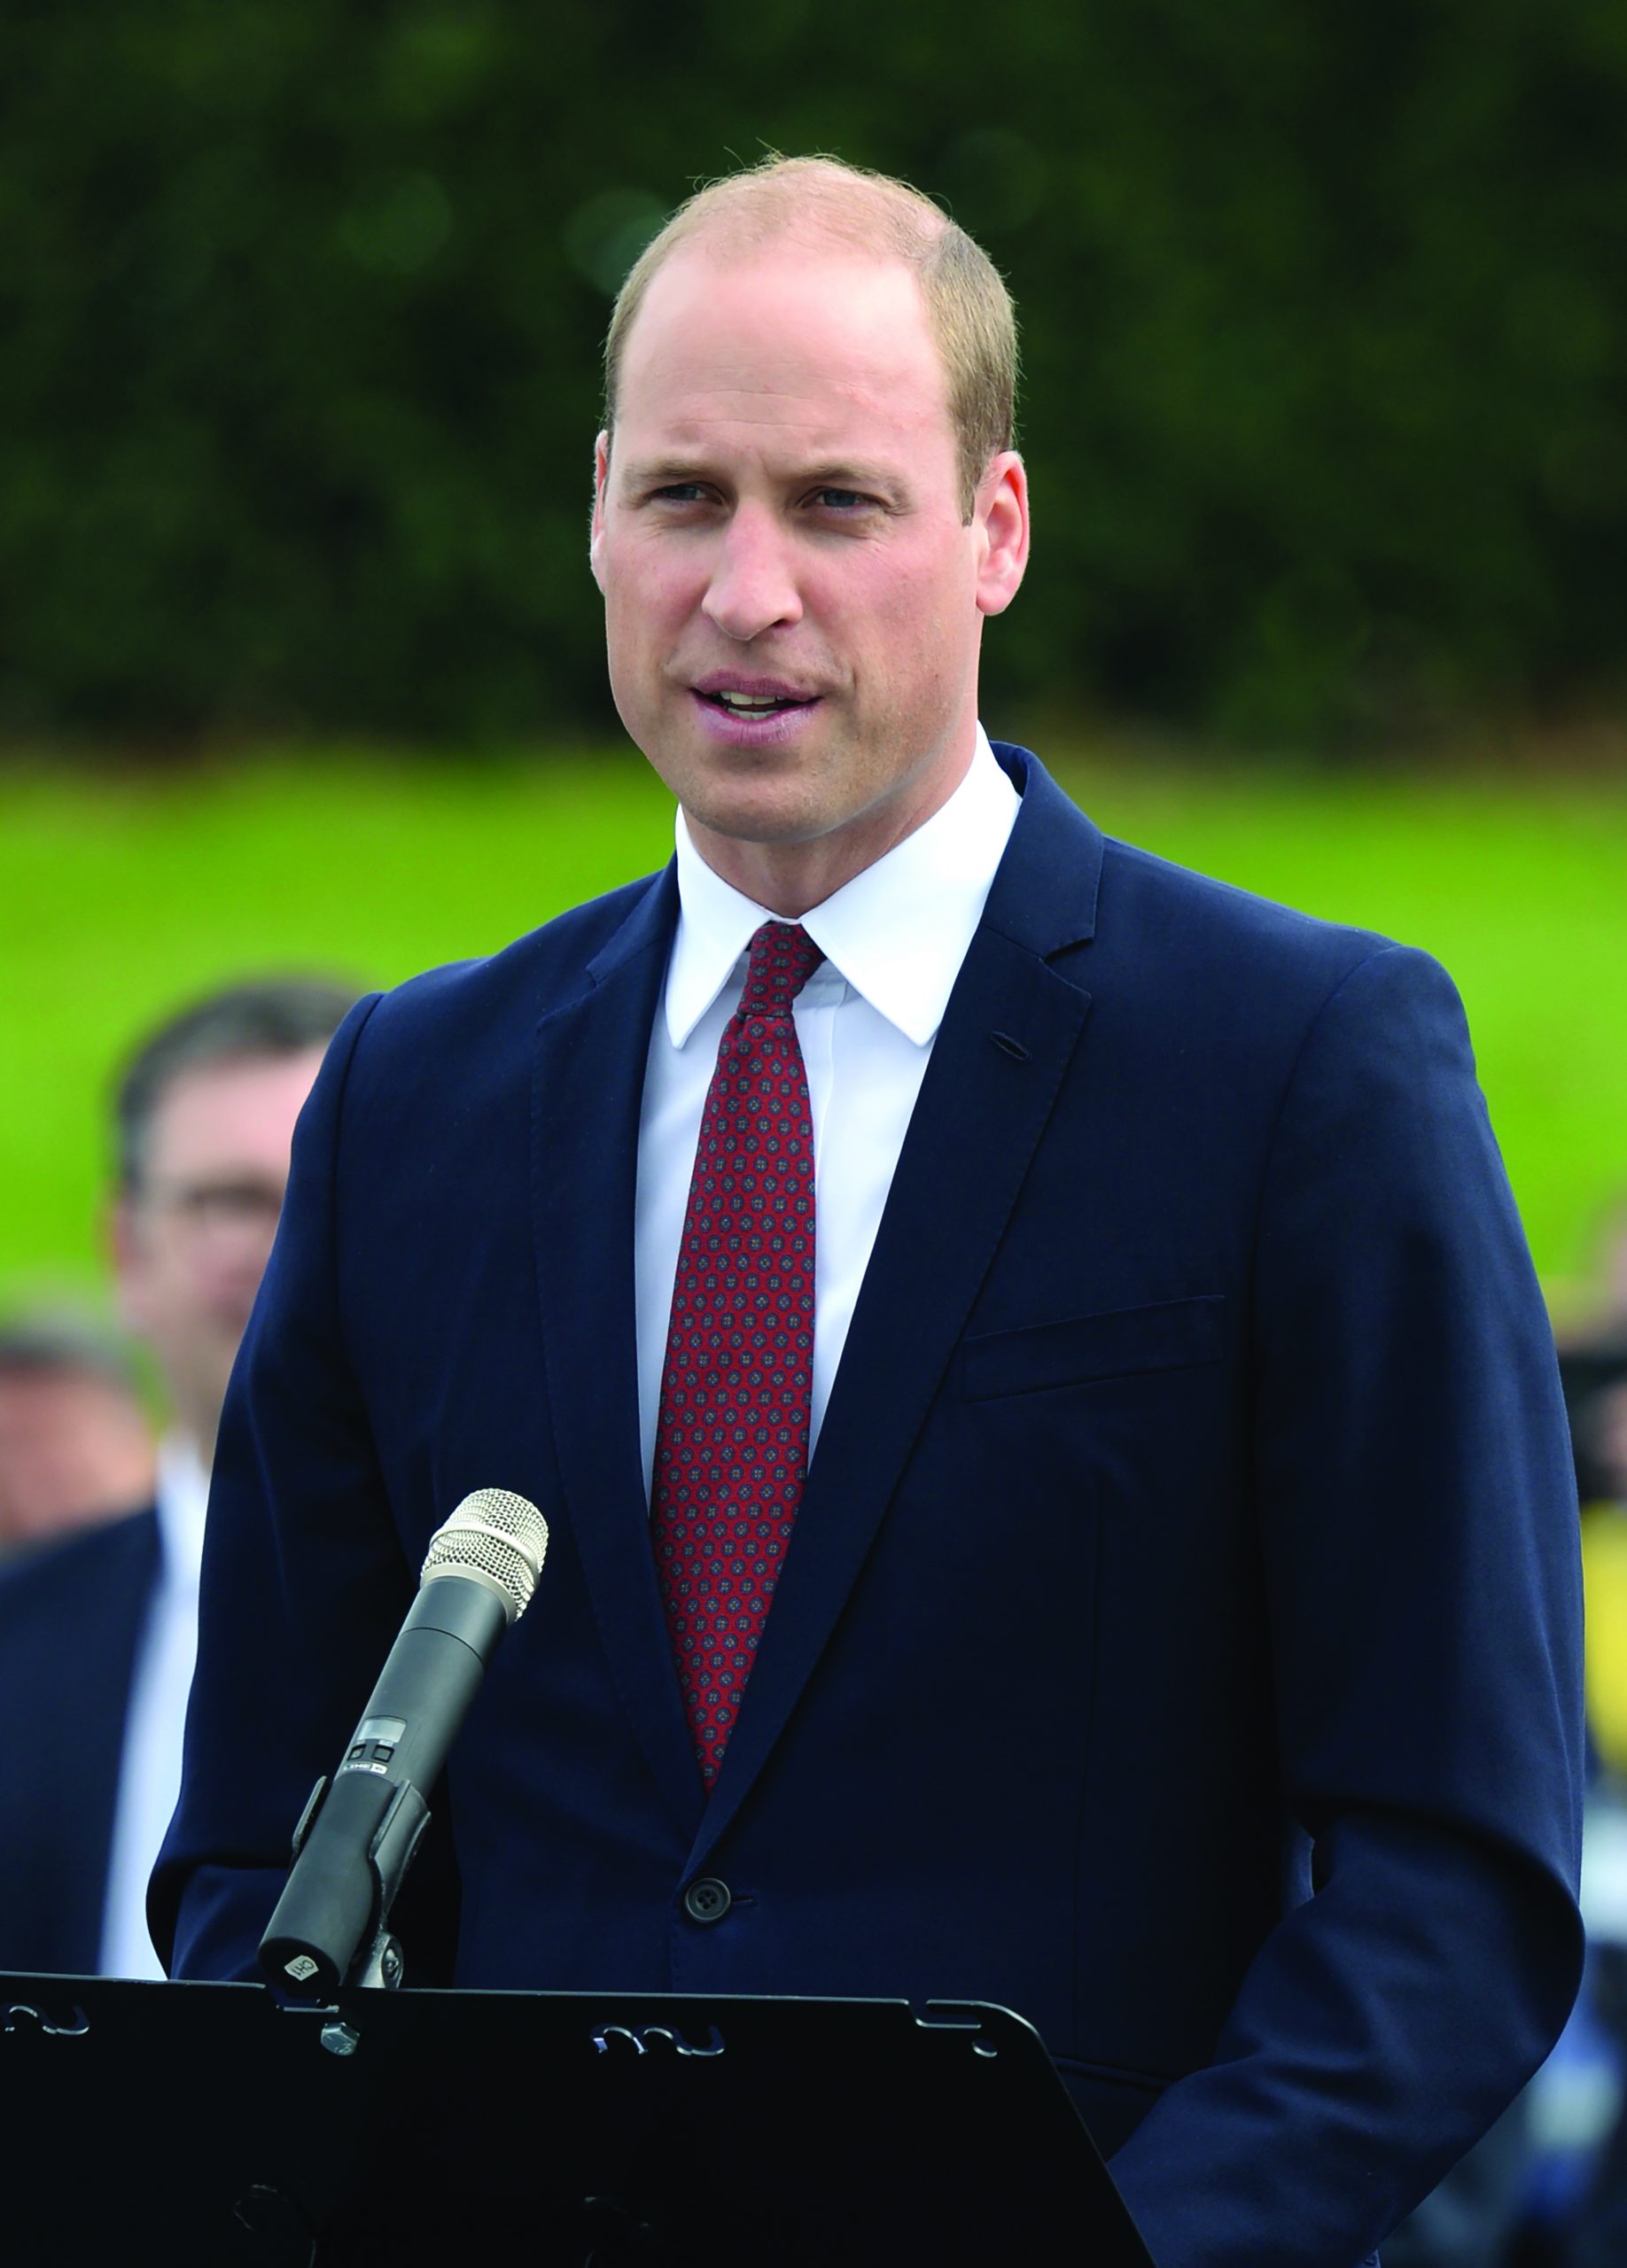 The Duke of Cambridge